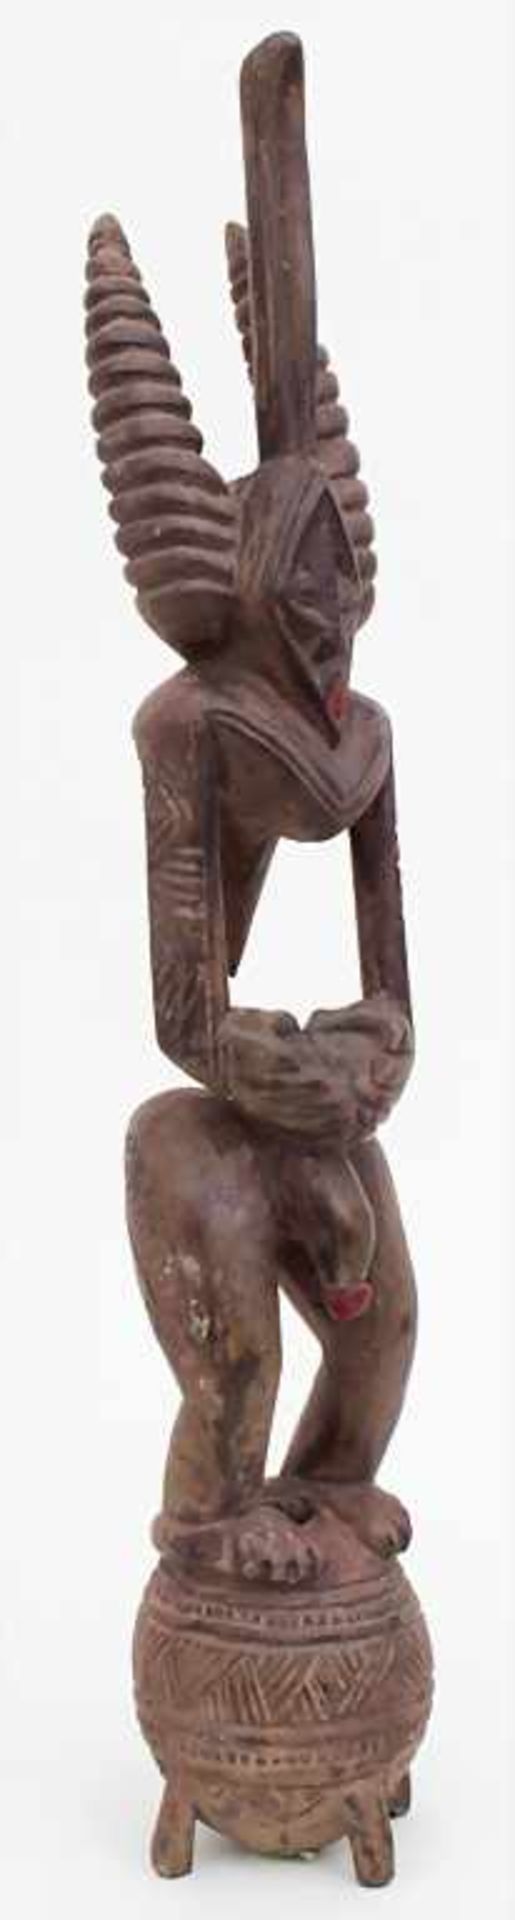 Männliche Figur / A male figure, Igala, NigeriaMaterial: Holz, rotbraune Patina,Höhe: 57 cm,